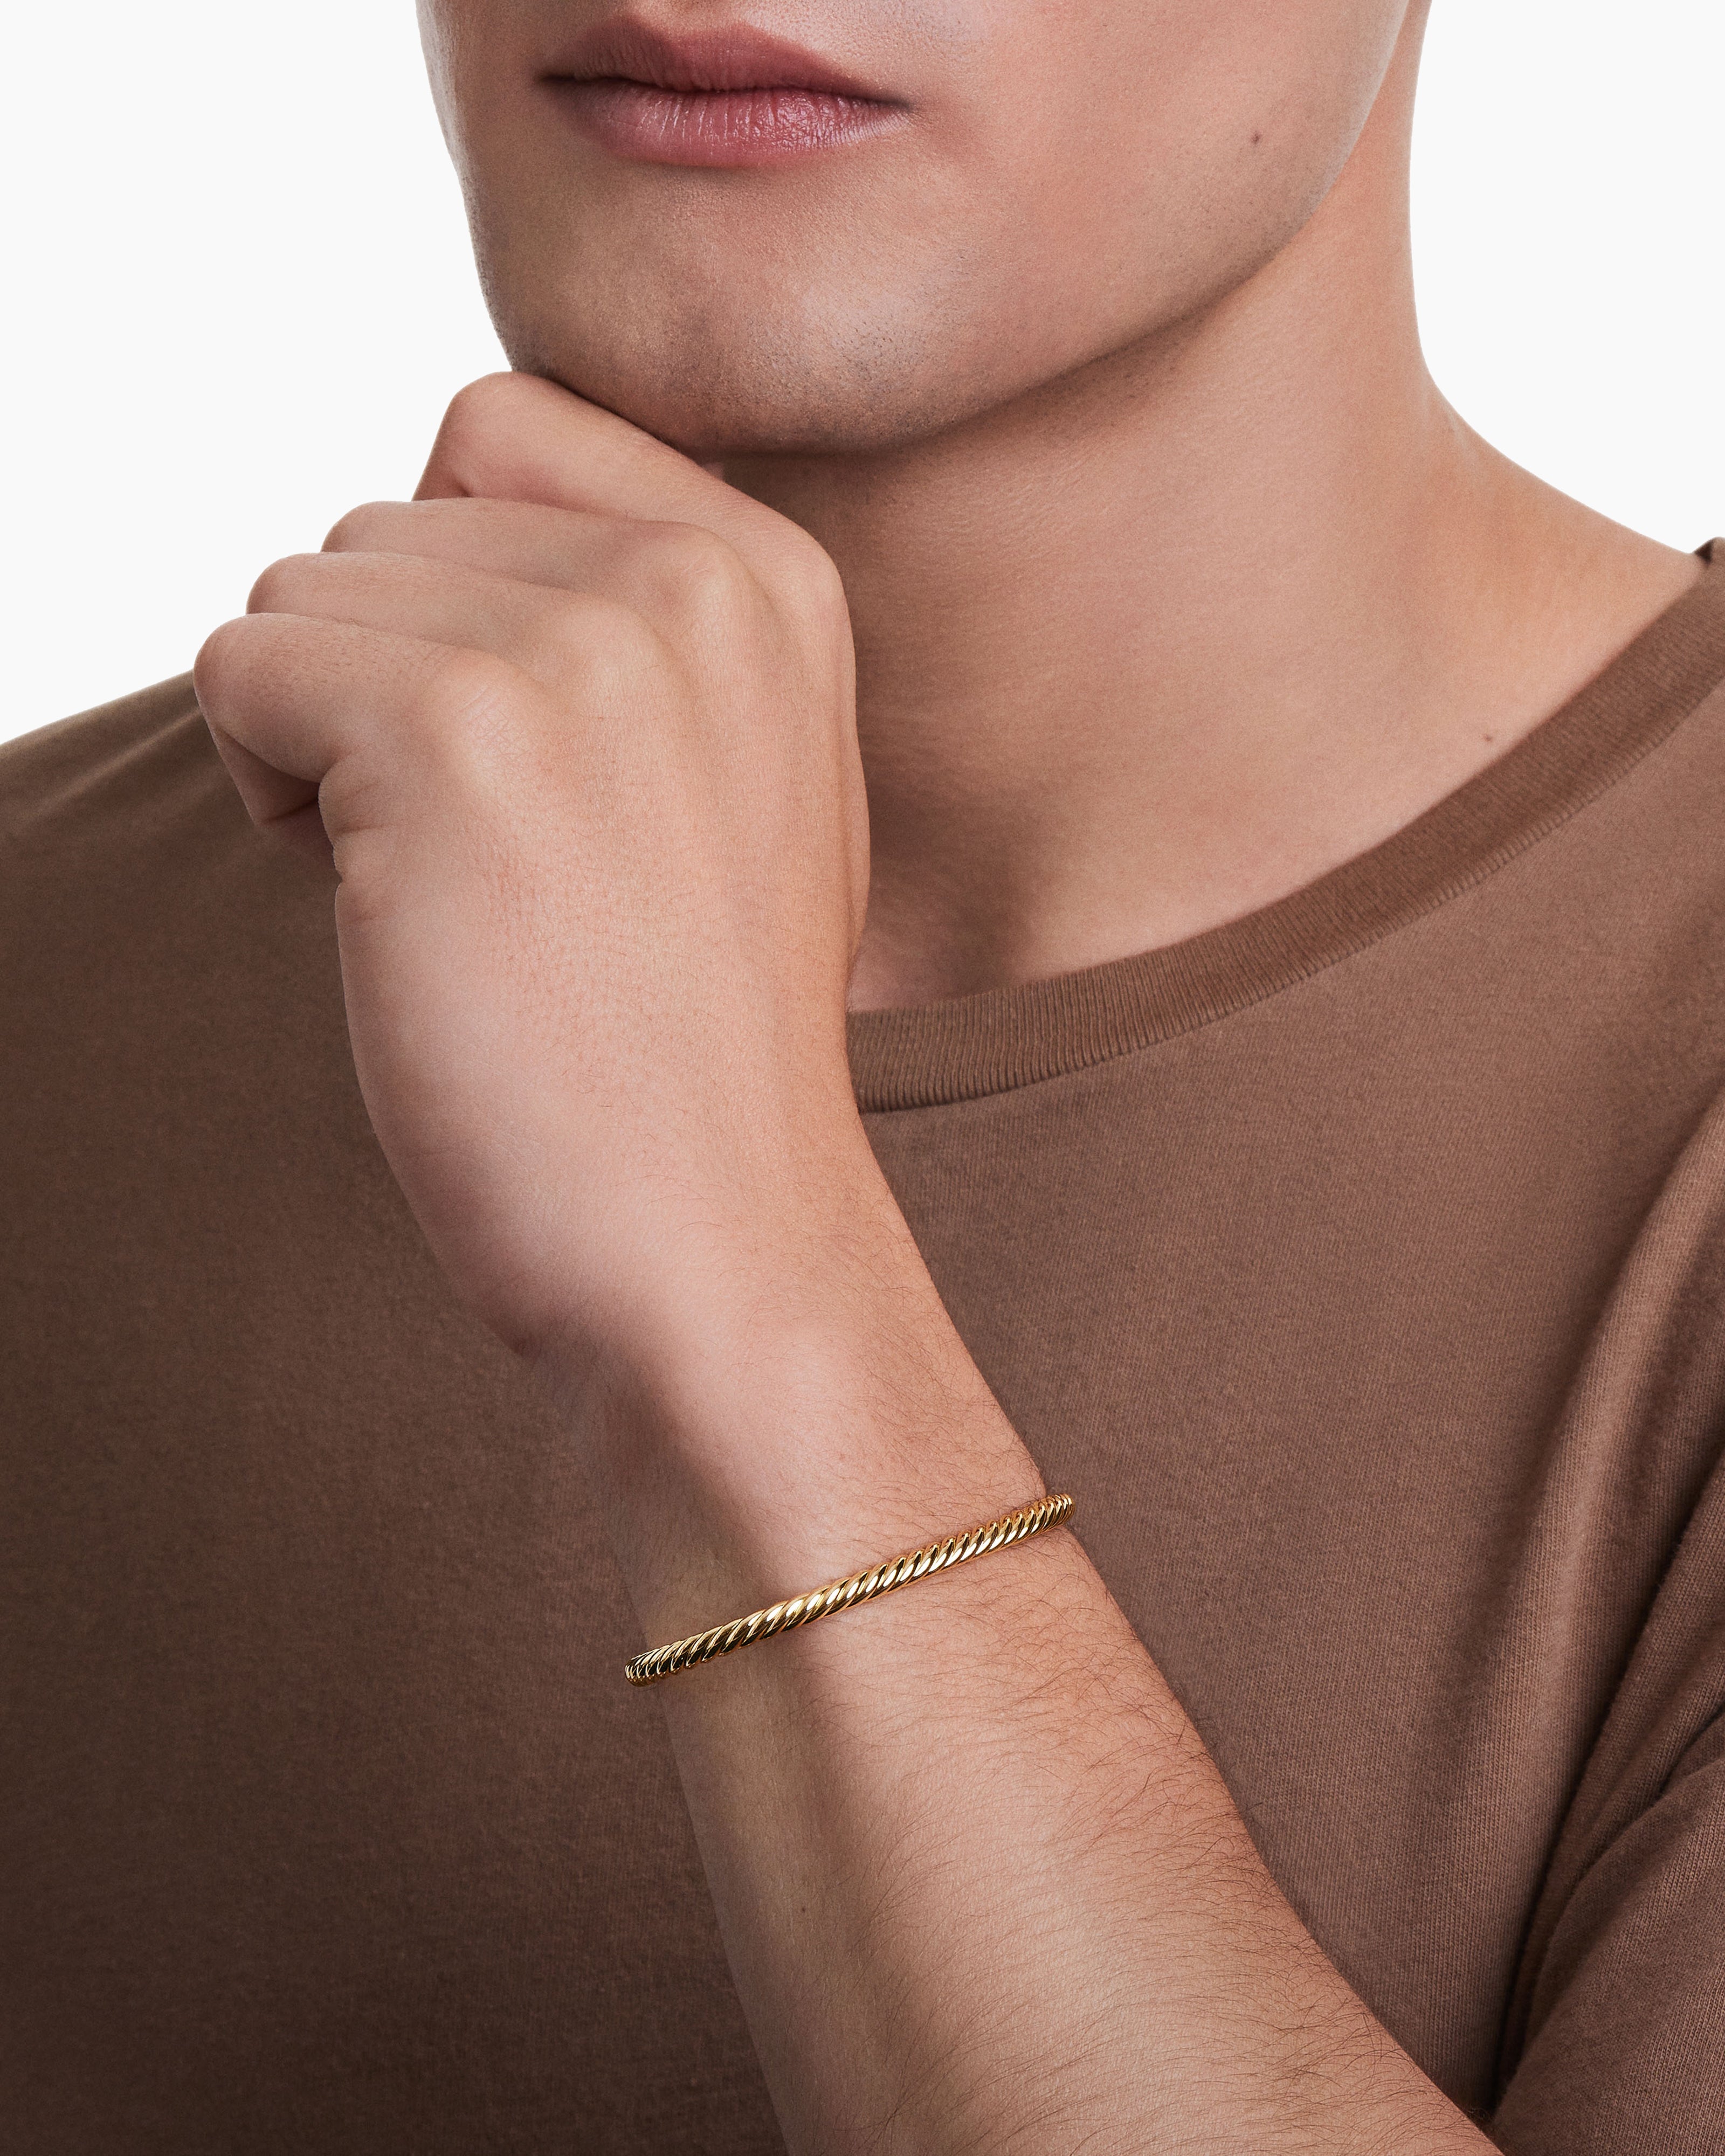 Amazon.com: Galis Cuff Bracelet - Non Tarnish Bracelet Made of Premium  Stainless Steel - Waterproof and Minimalist Bracelet Looks Like Viking  Jewelry, Gold Plated Women's and Men's Bracelet for 6” - 6.5